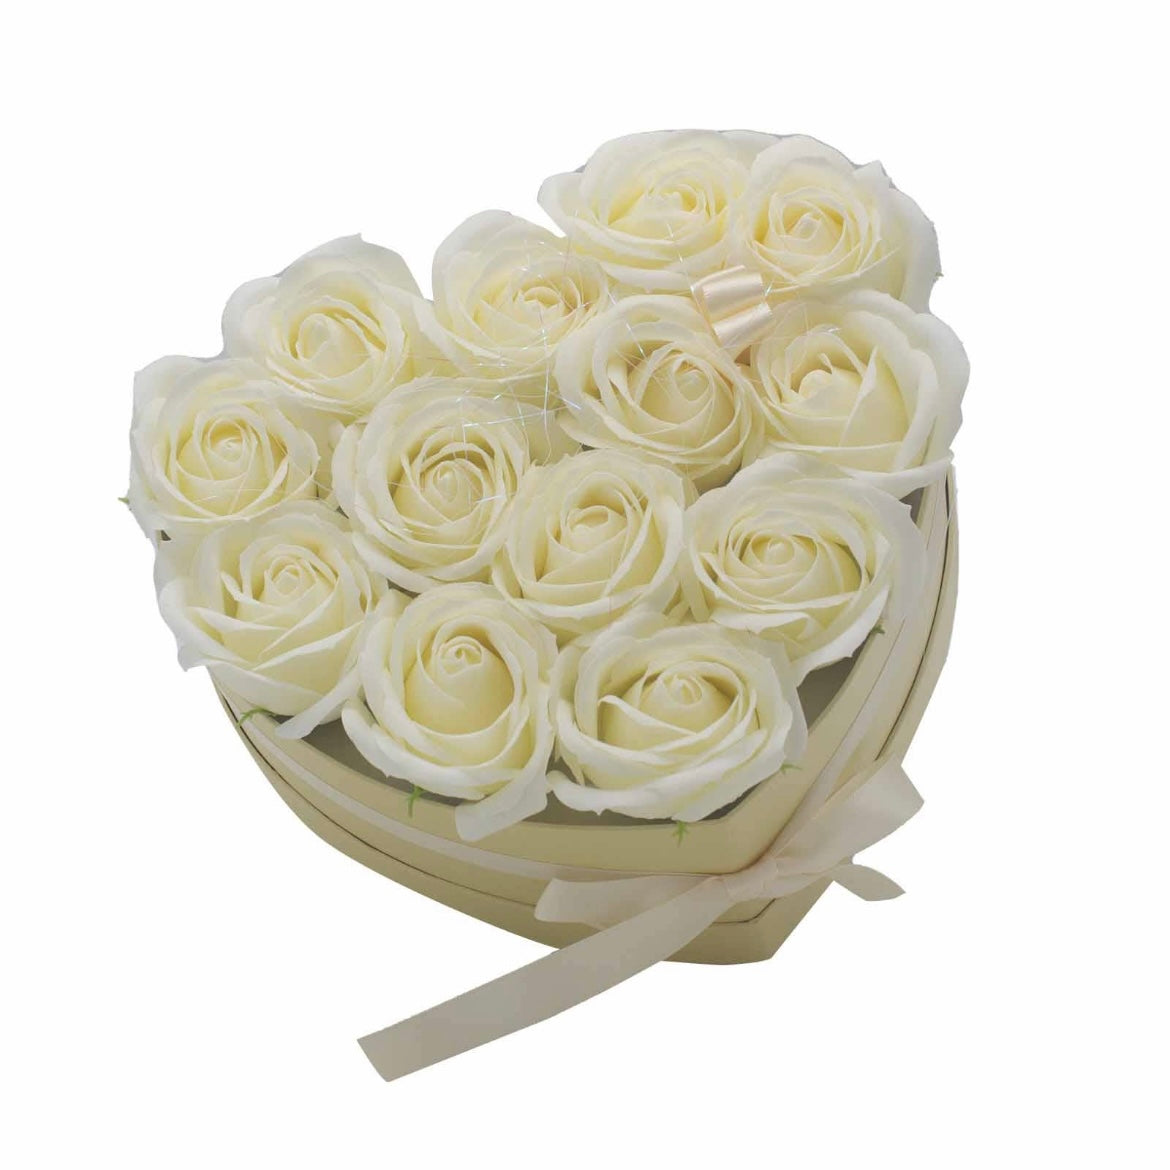 Stunning Rose Bouquet Soap - Large Heart Shape Cream